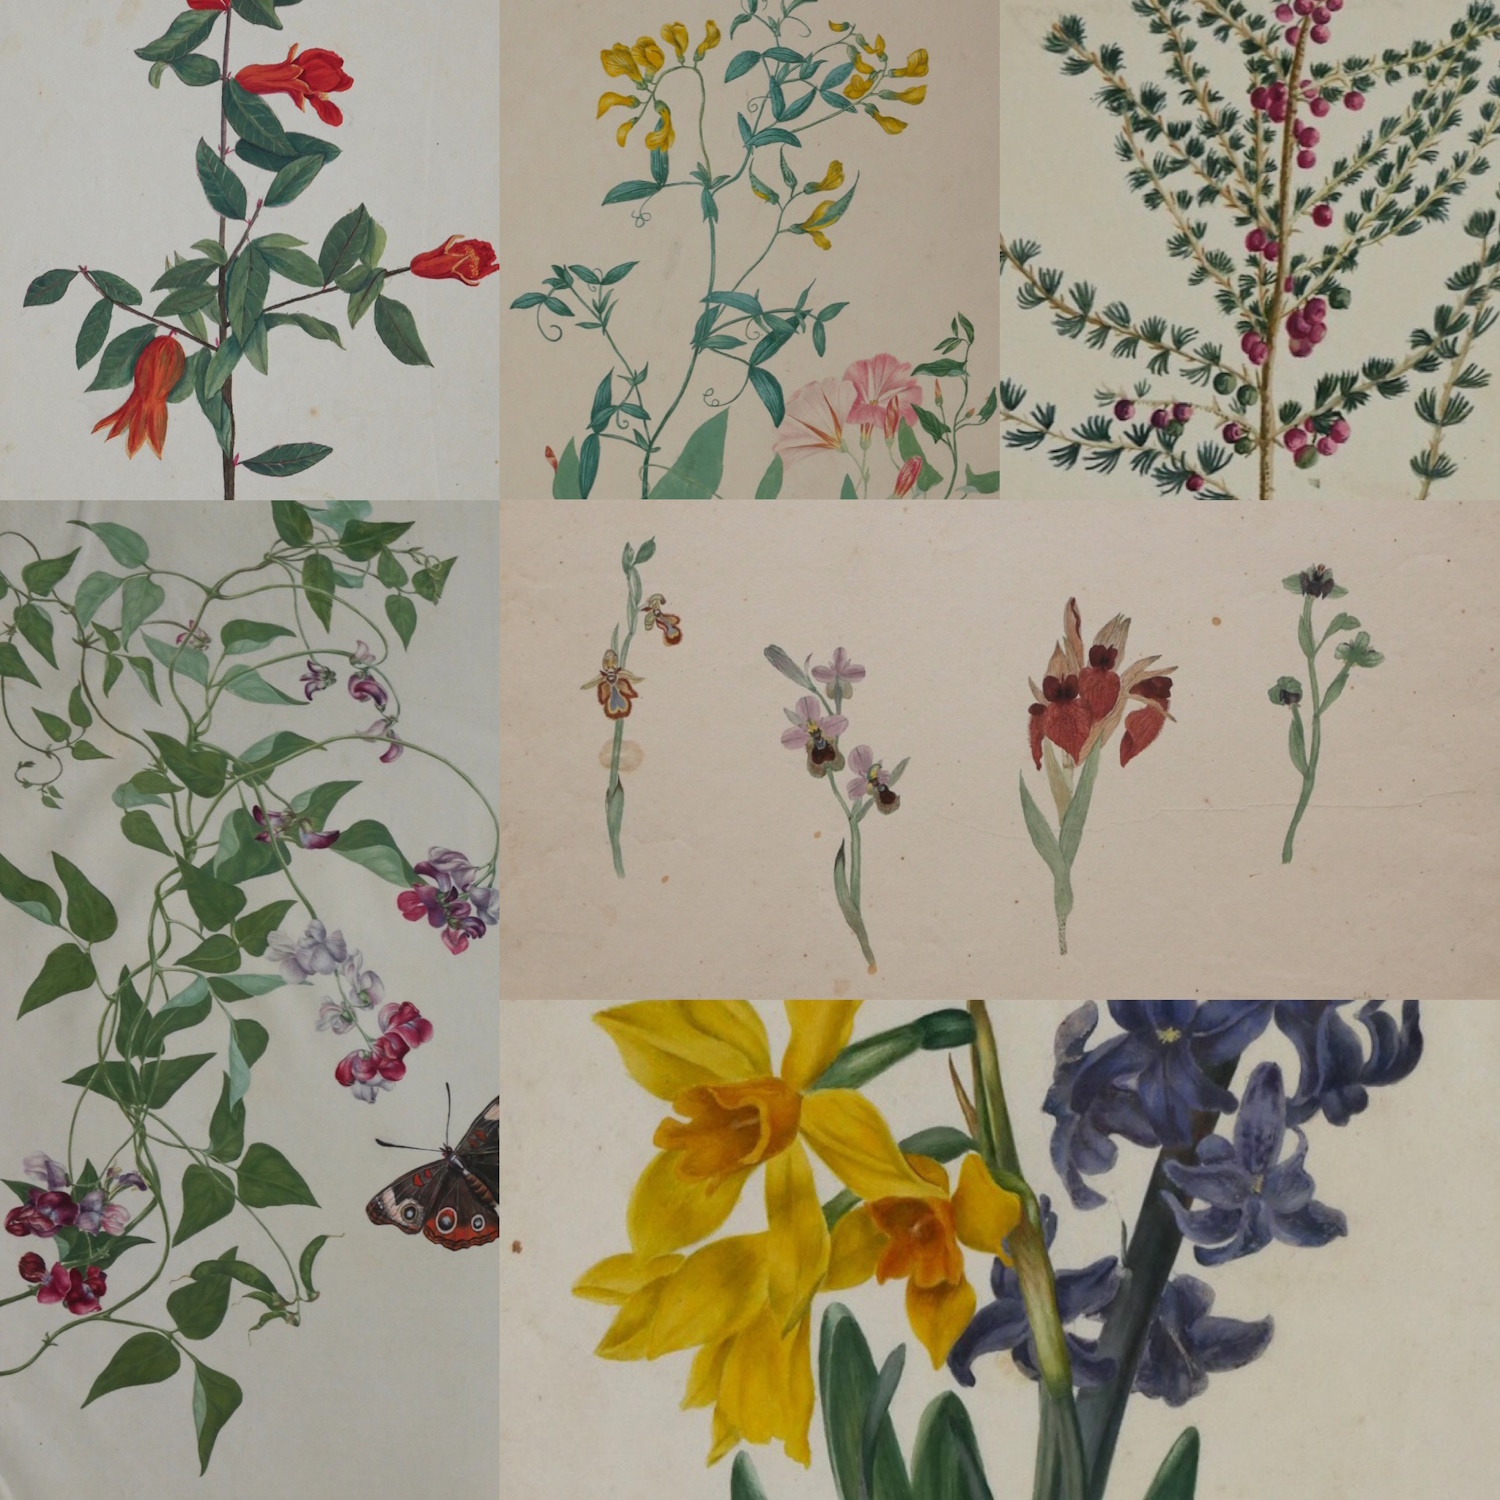 Caroline Amelia Fox – Six Studies of Plants 1801-7